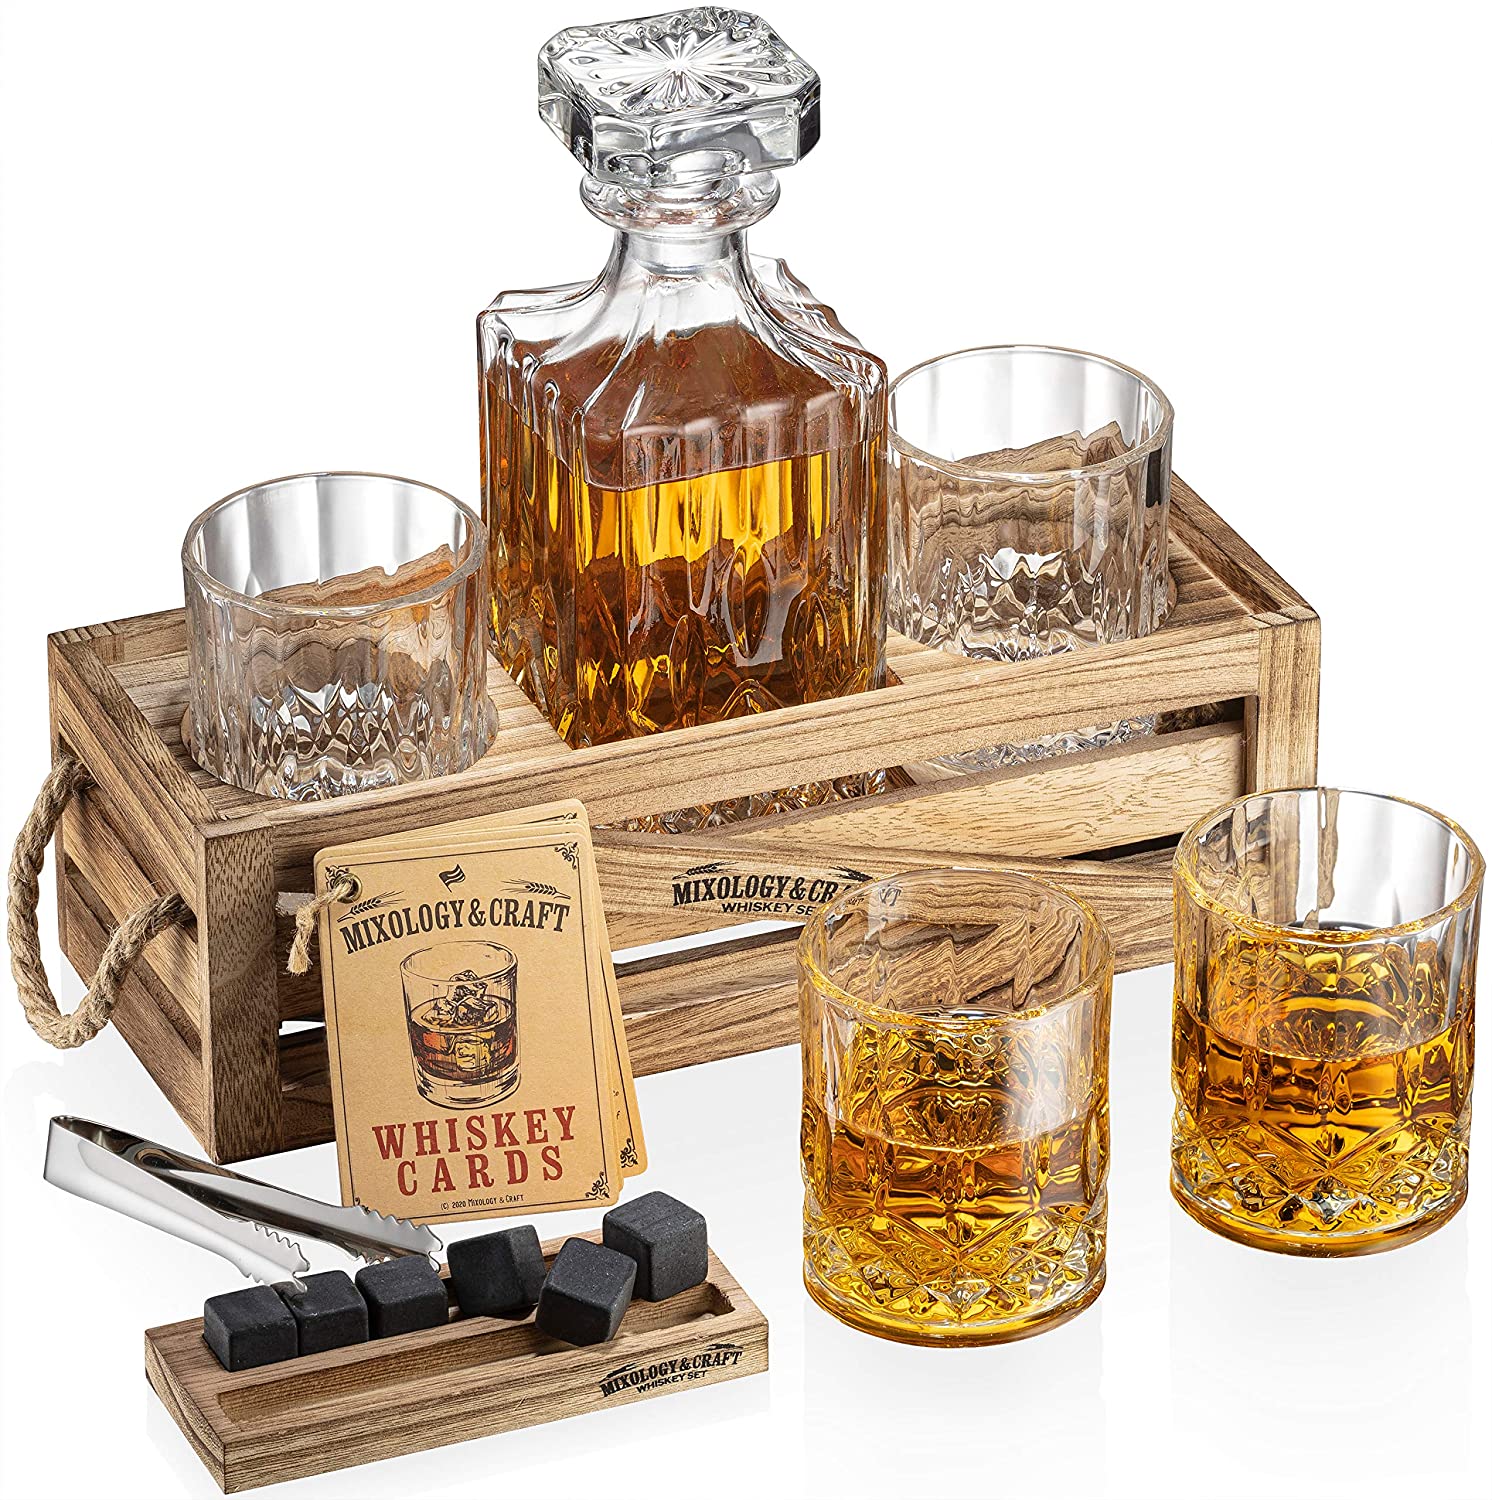 Hot sale Gold Whisky Stones - Home Whisky Glass Classy whisky decanter Whisky Stones by wooden holder Gift for Men – Shunstone